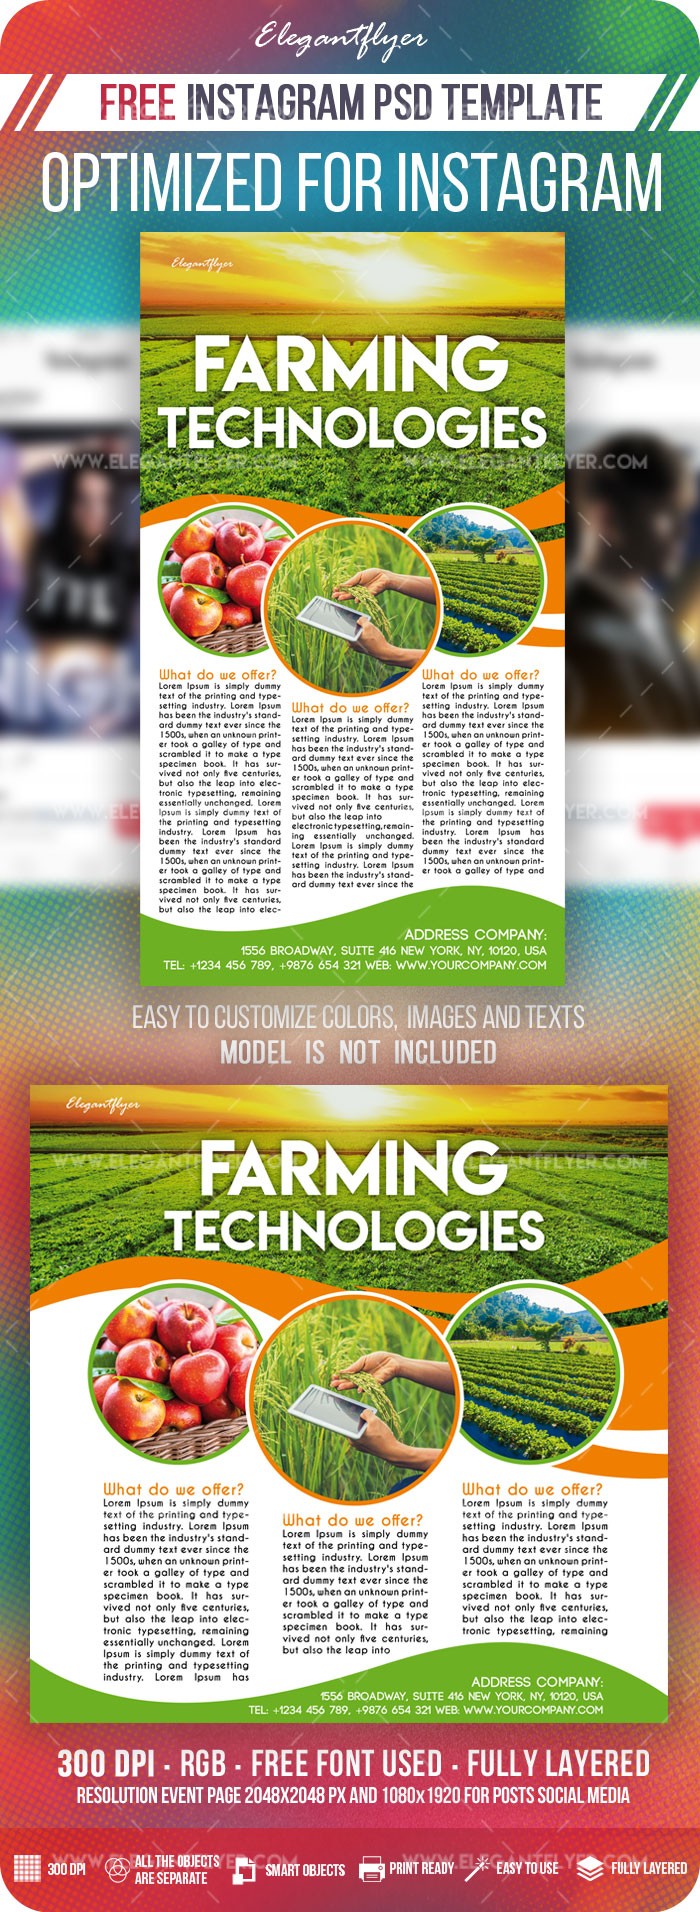 Farming Technologies Instagram by ElegantFlyer